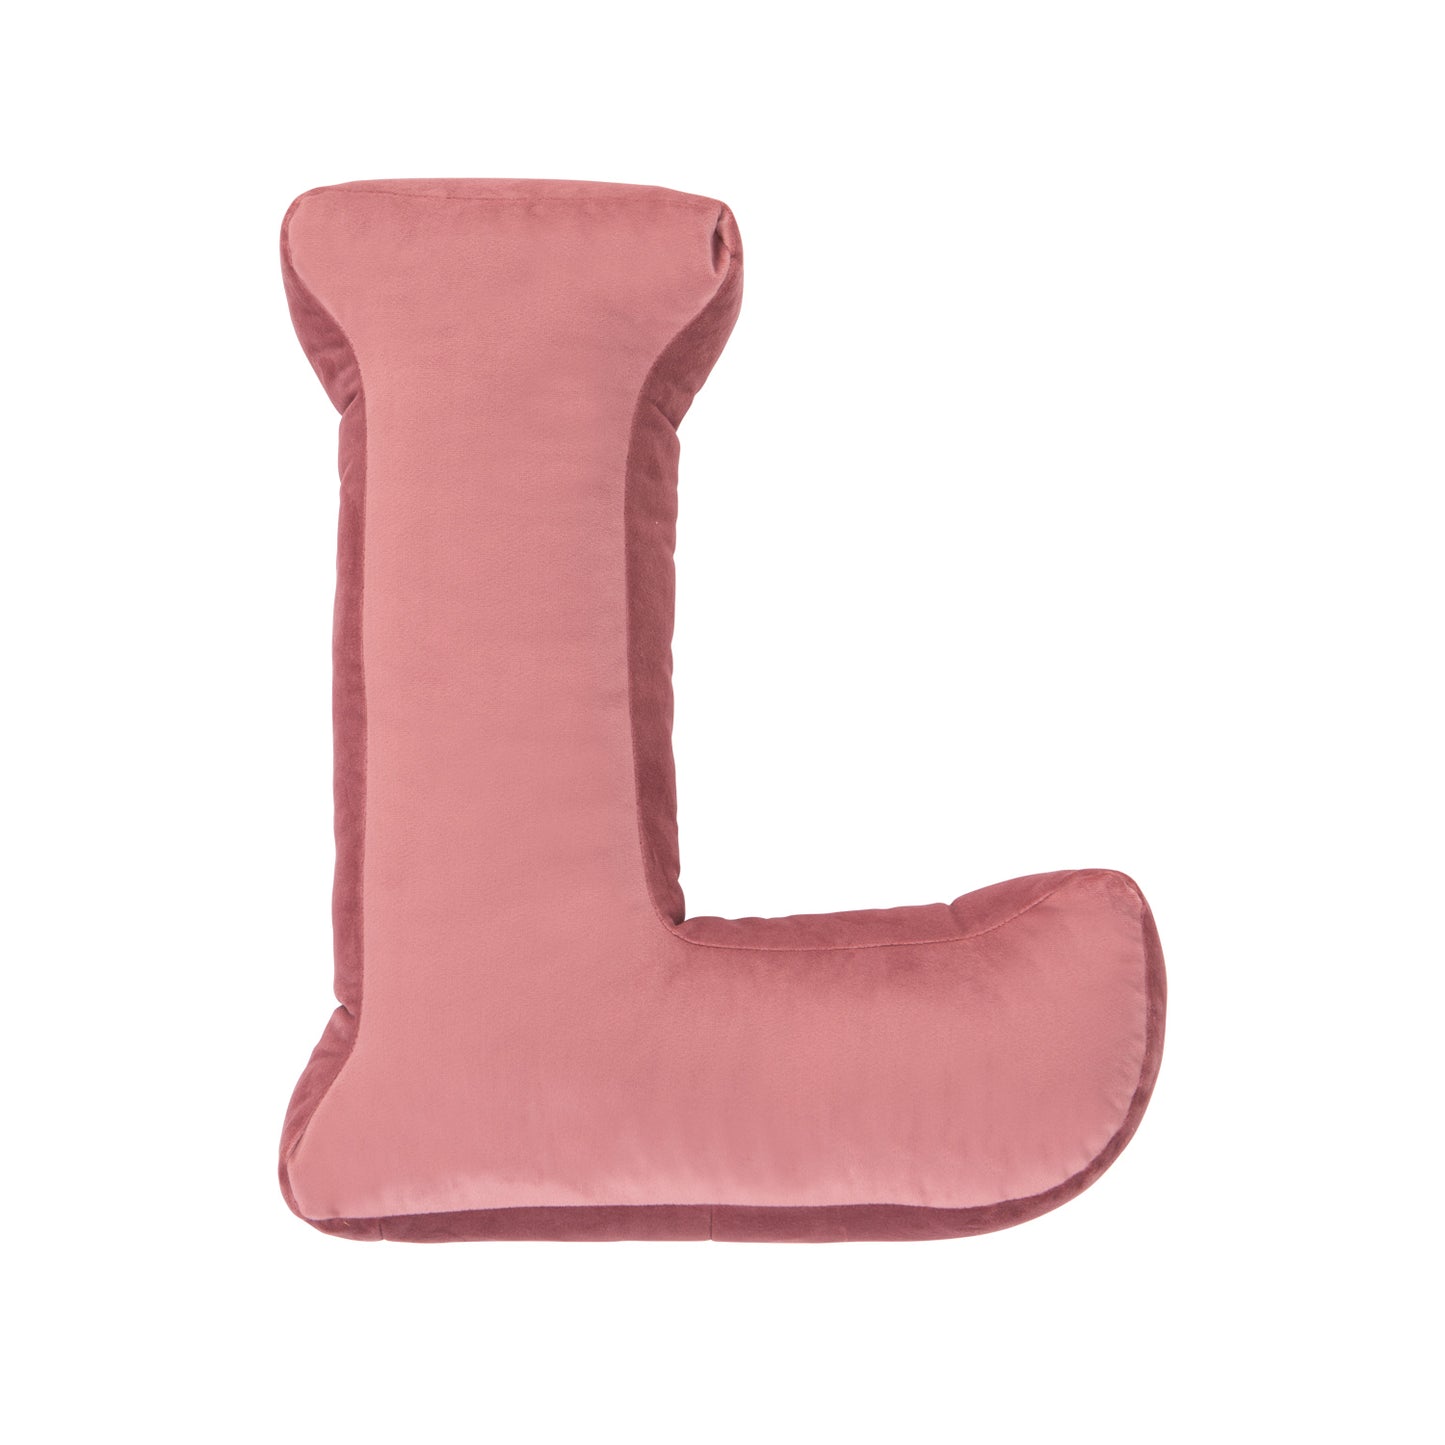 velvet letter cushion l old rose pink by bettys home